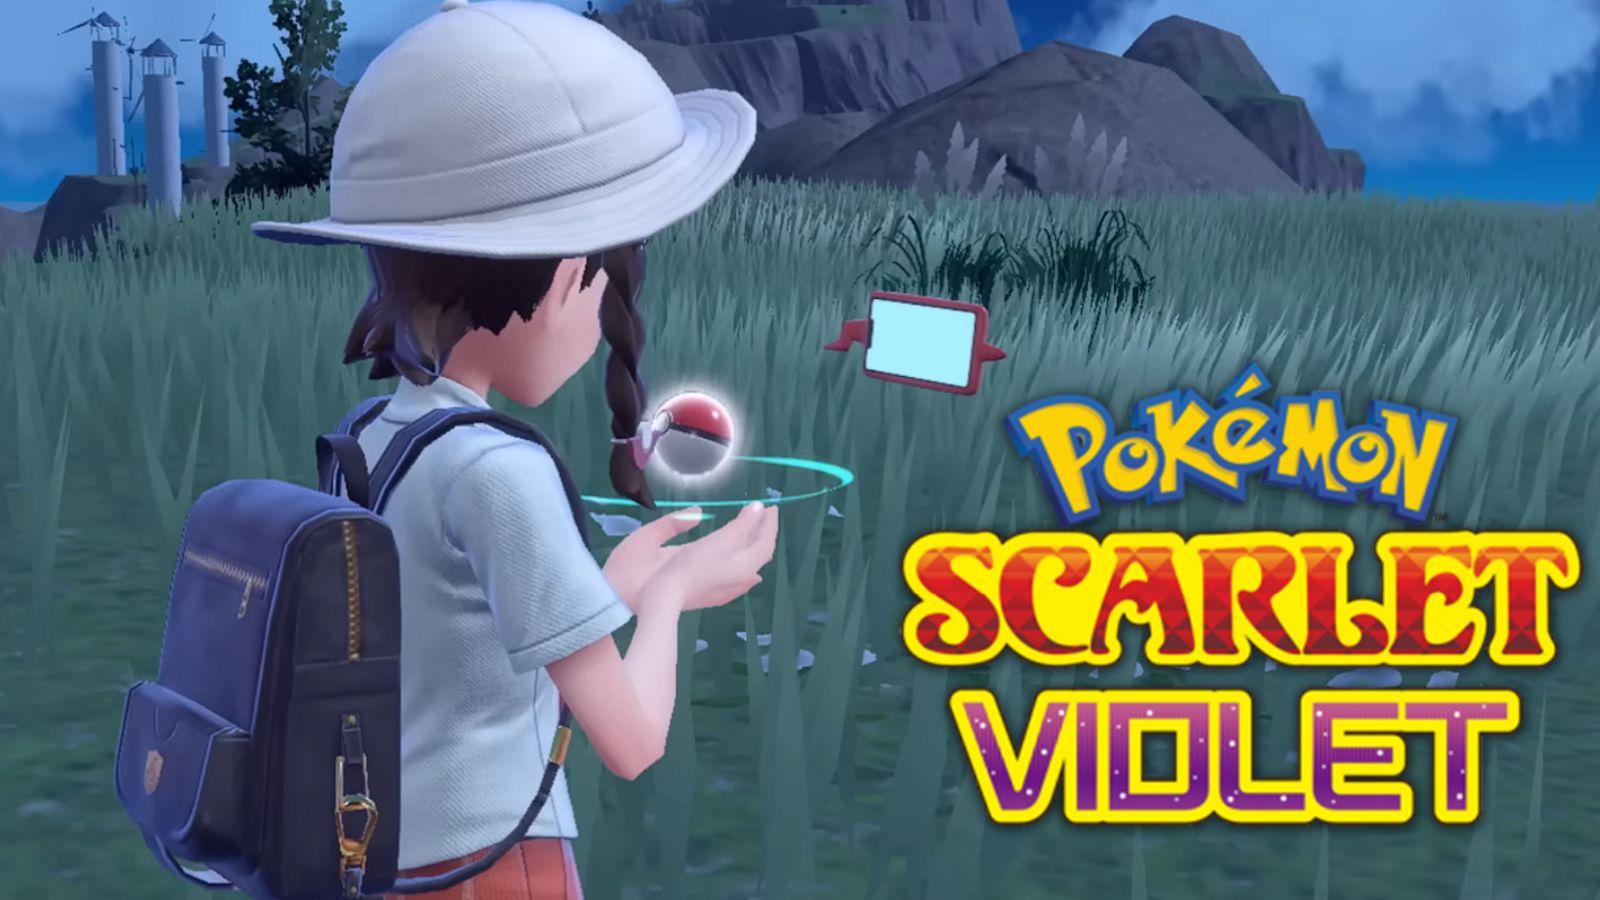 Pokémon Scarlet and Violet trade codes explained